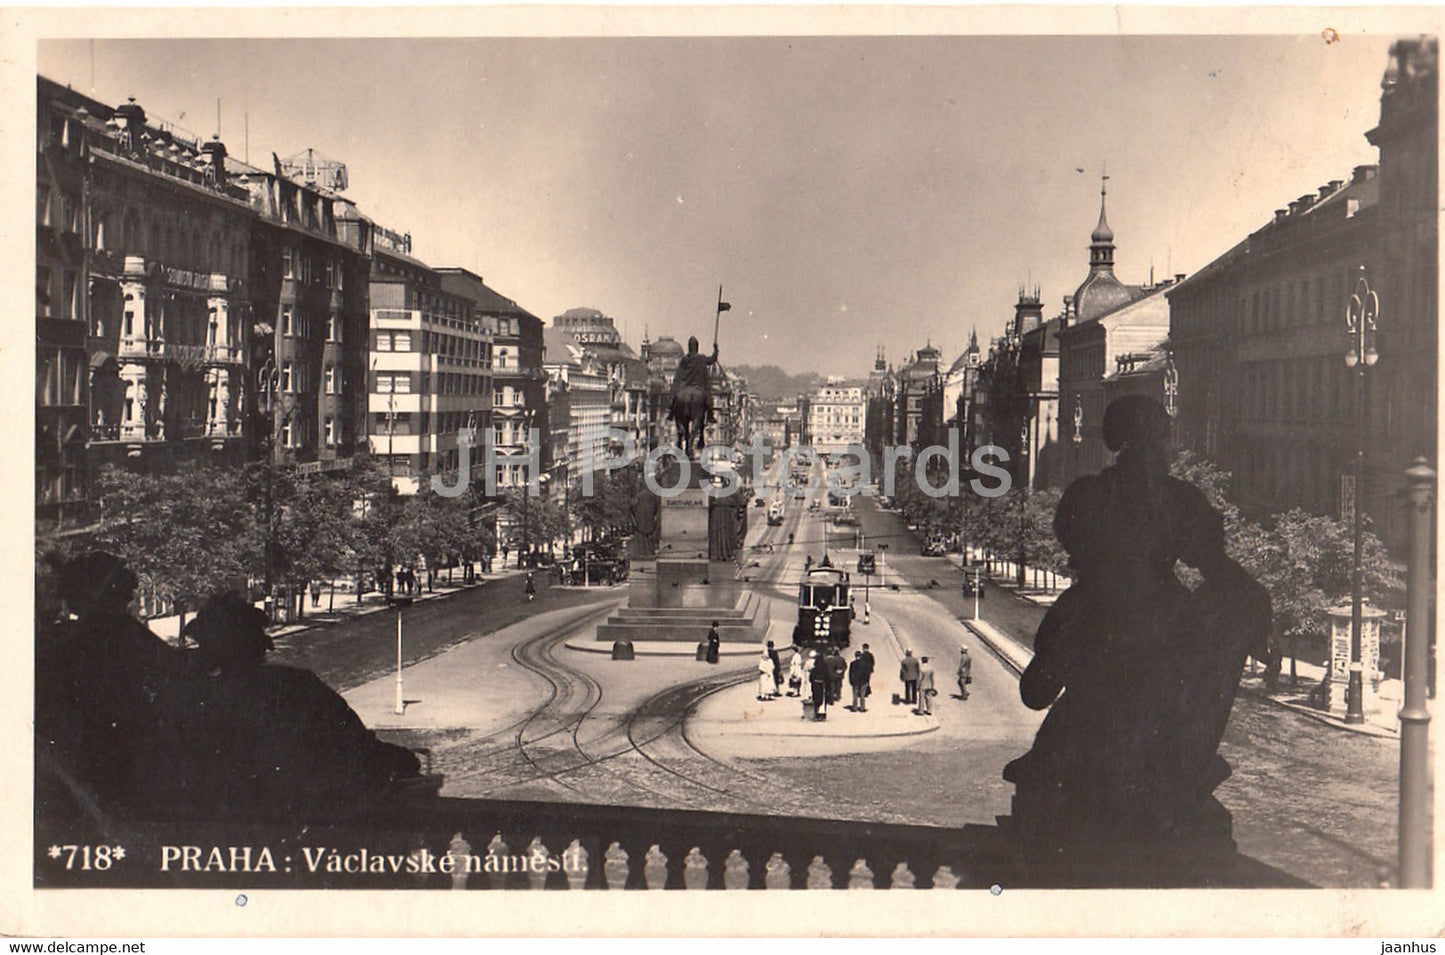 Praha - Prague - Vaclavske namesti - tram - 718 - old postcard - 1934 - Czech Republic - used - JH Postcards